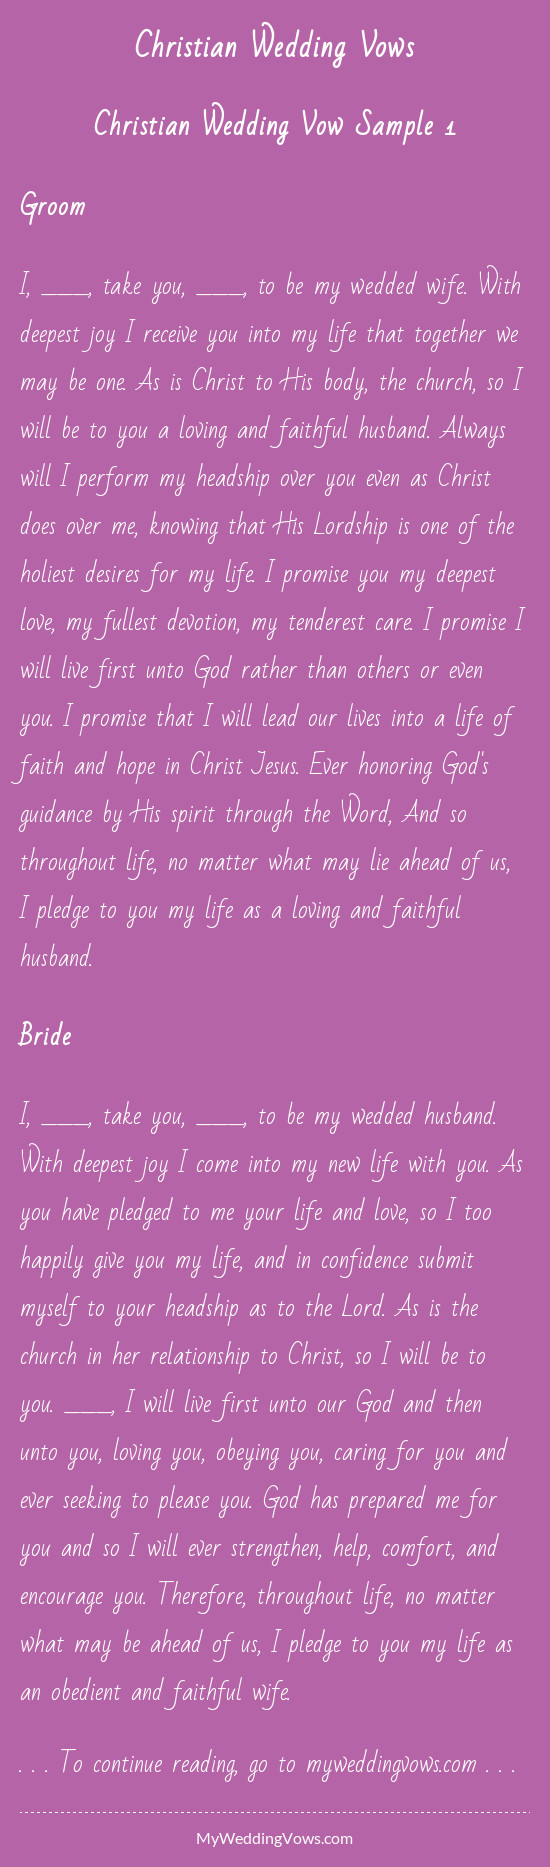 Sample Christian Wedding Vows
 Christian Wedding Poems